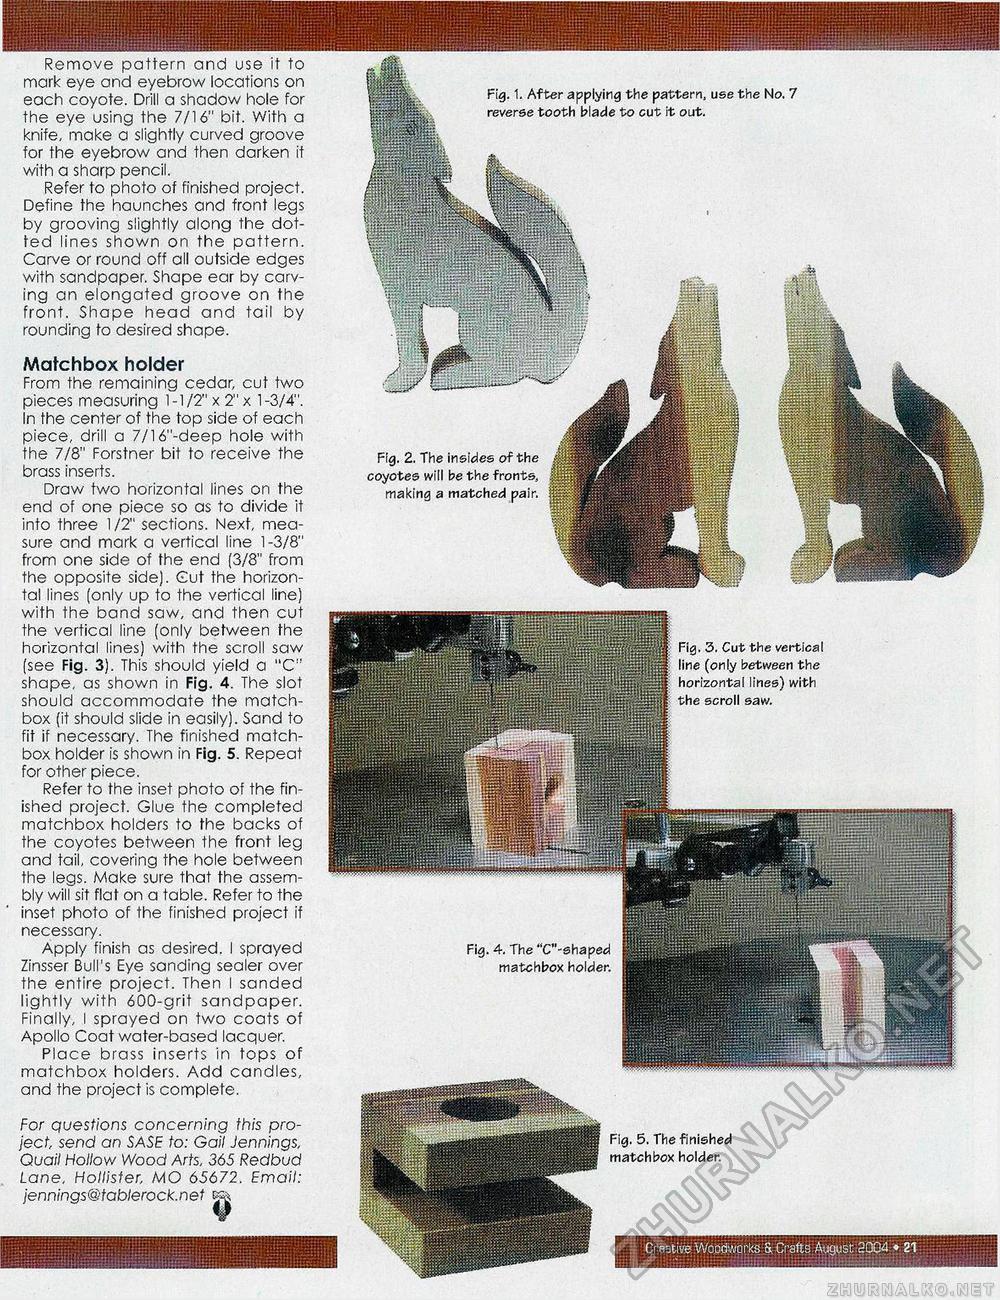 Creative Woodworks & crafts 2004-08,  21